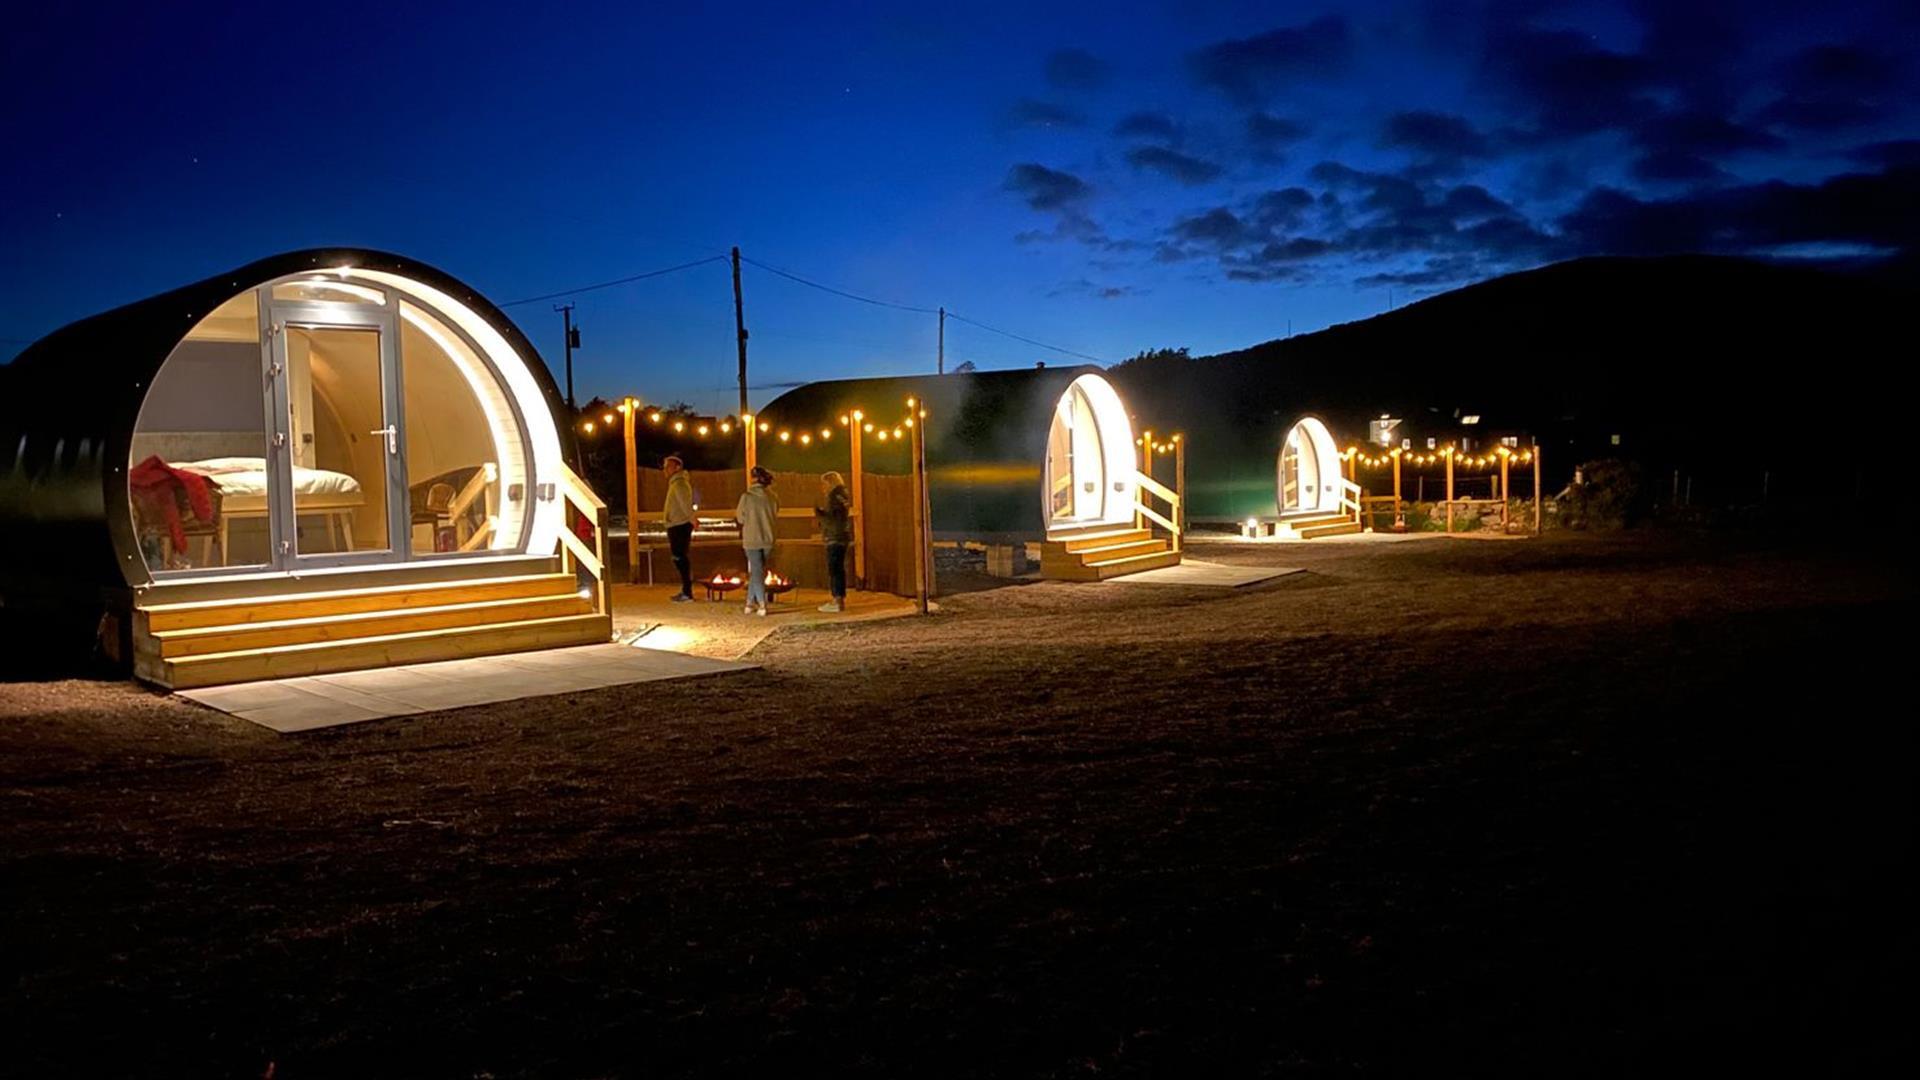 Nature's Lodge Camping Light & Fan